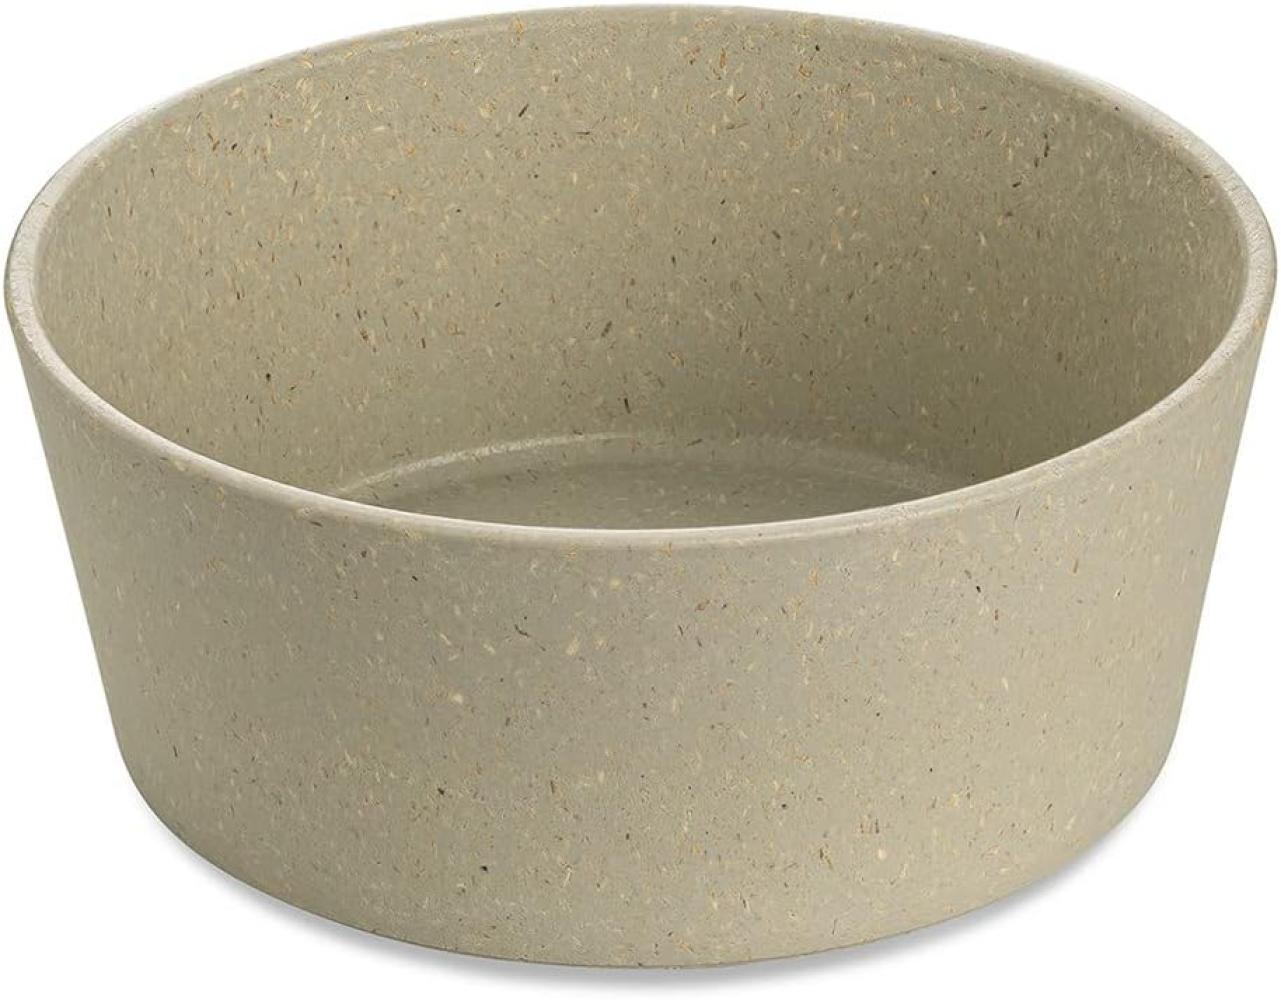 Koziol Schalen 2er-Set Connect Bowl, Schüsseln, Kunststoff-Holz-Mix, Nature Desert Sand, 400 ml, 7102700 Bild 1